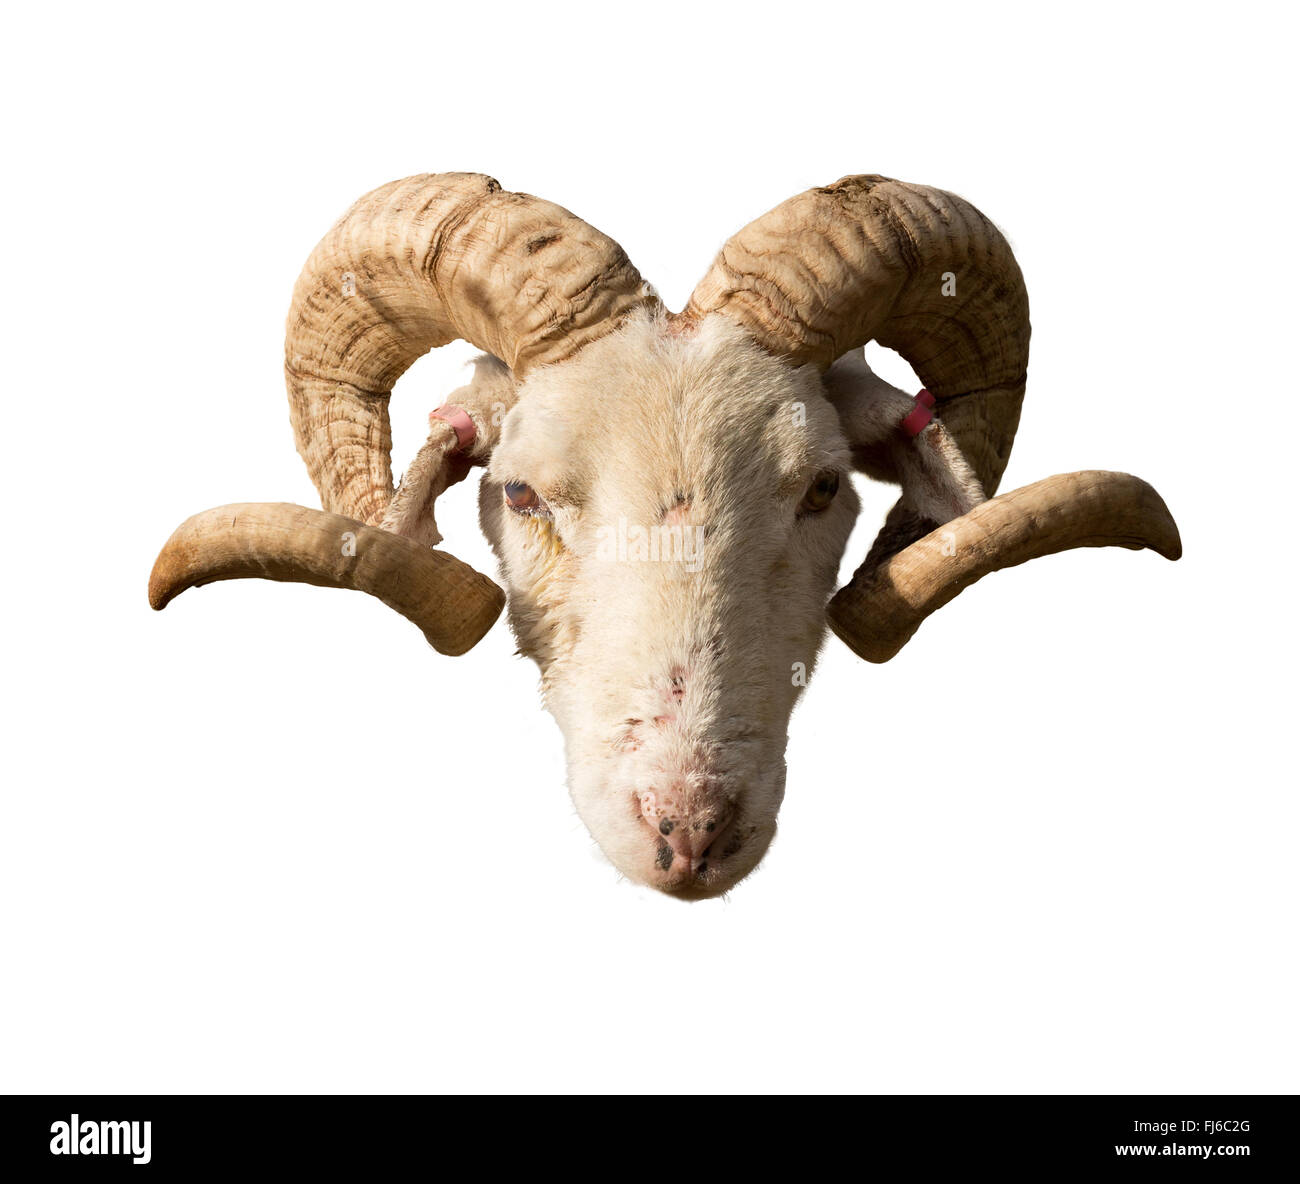 Isolated rams head Stock Photo - Alamy